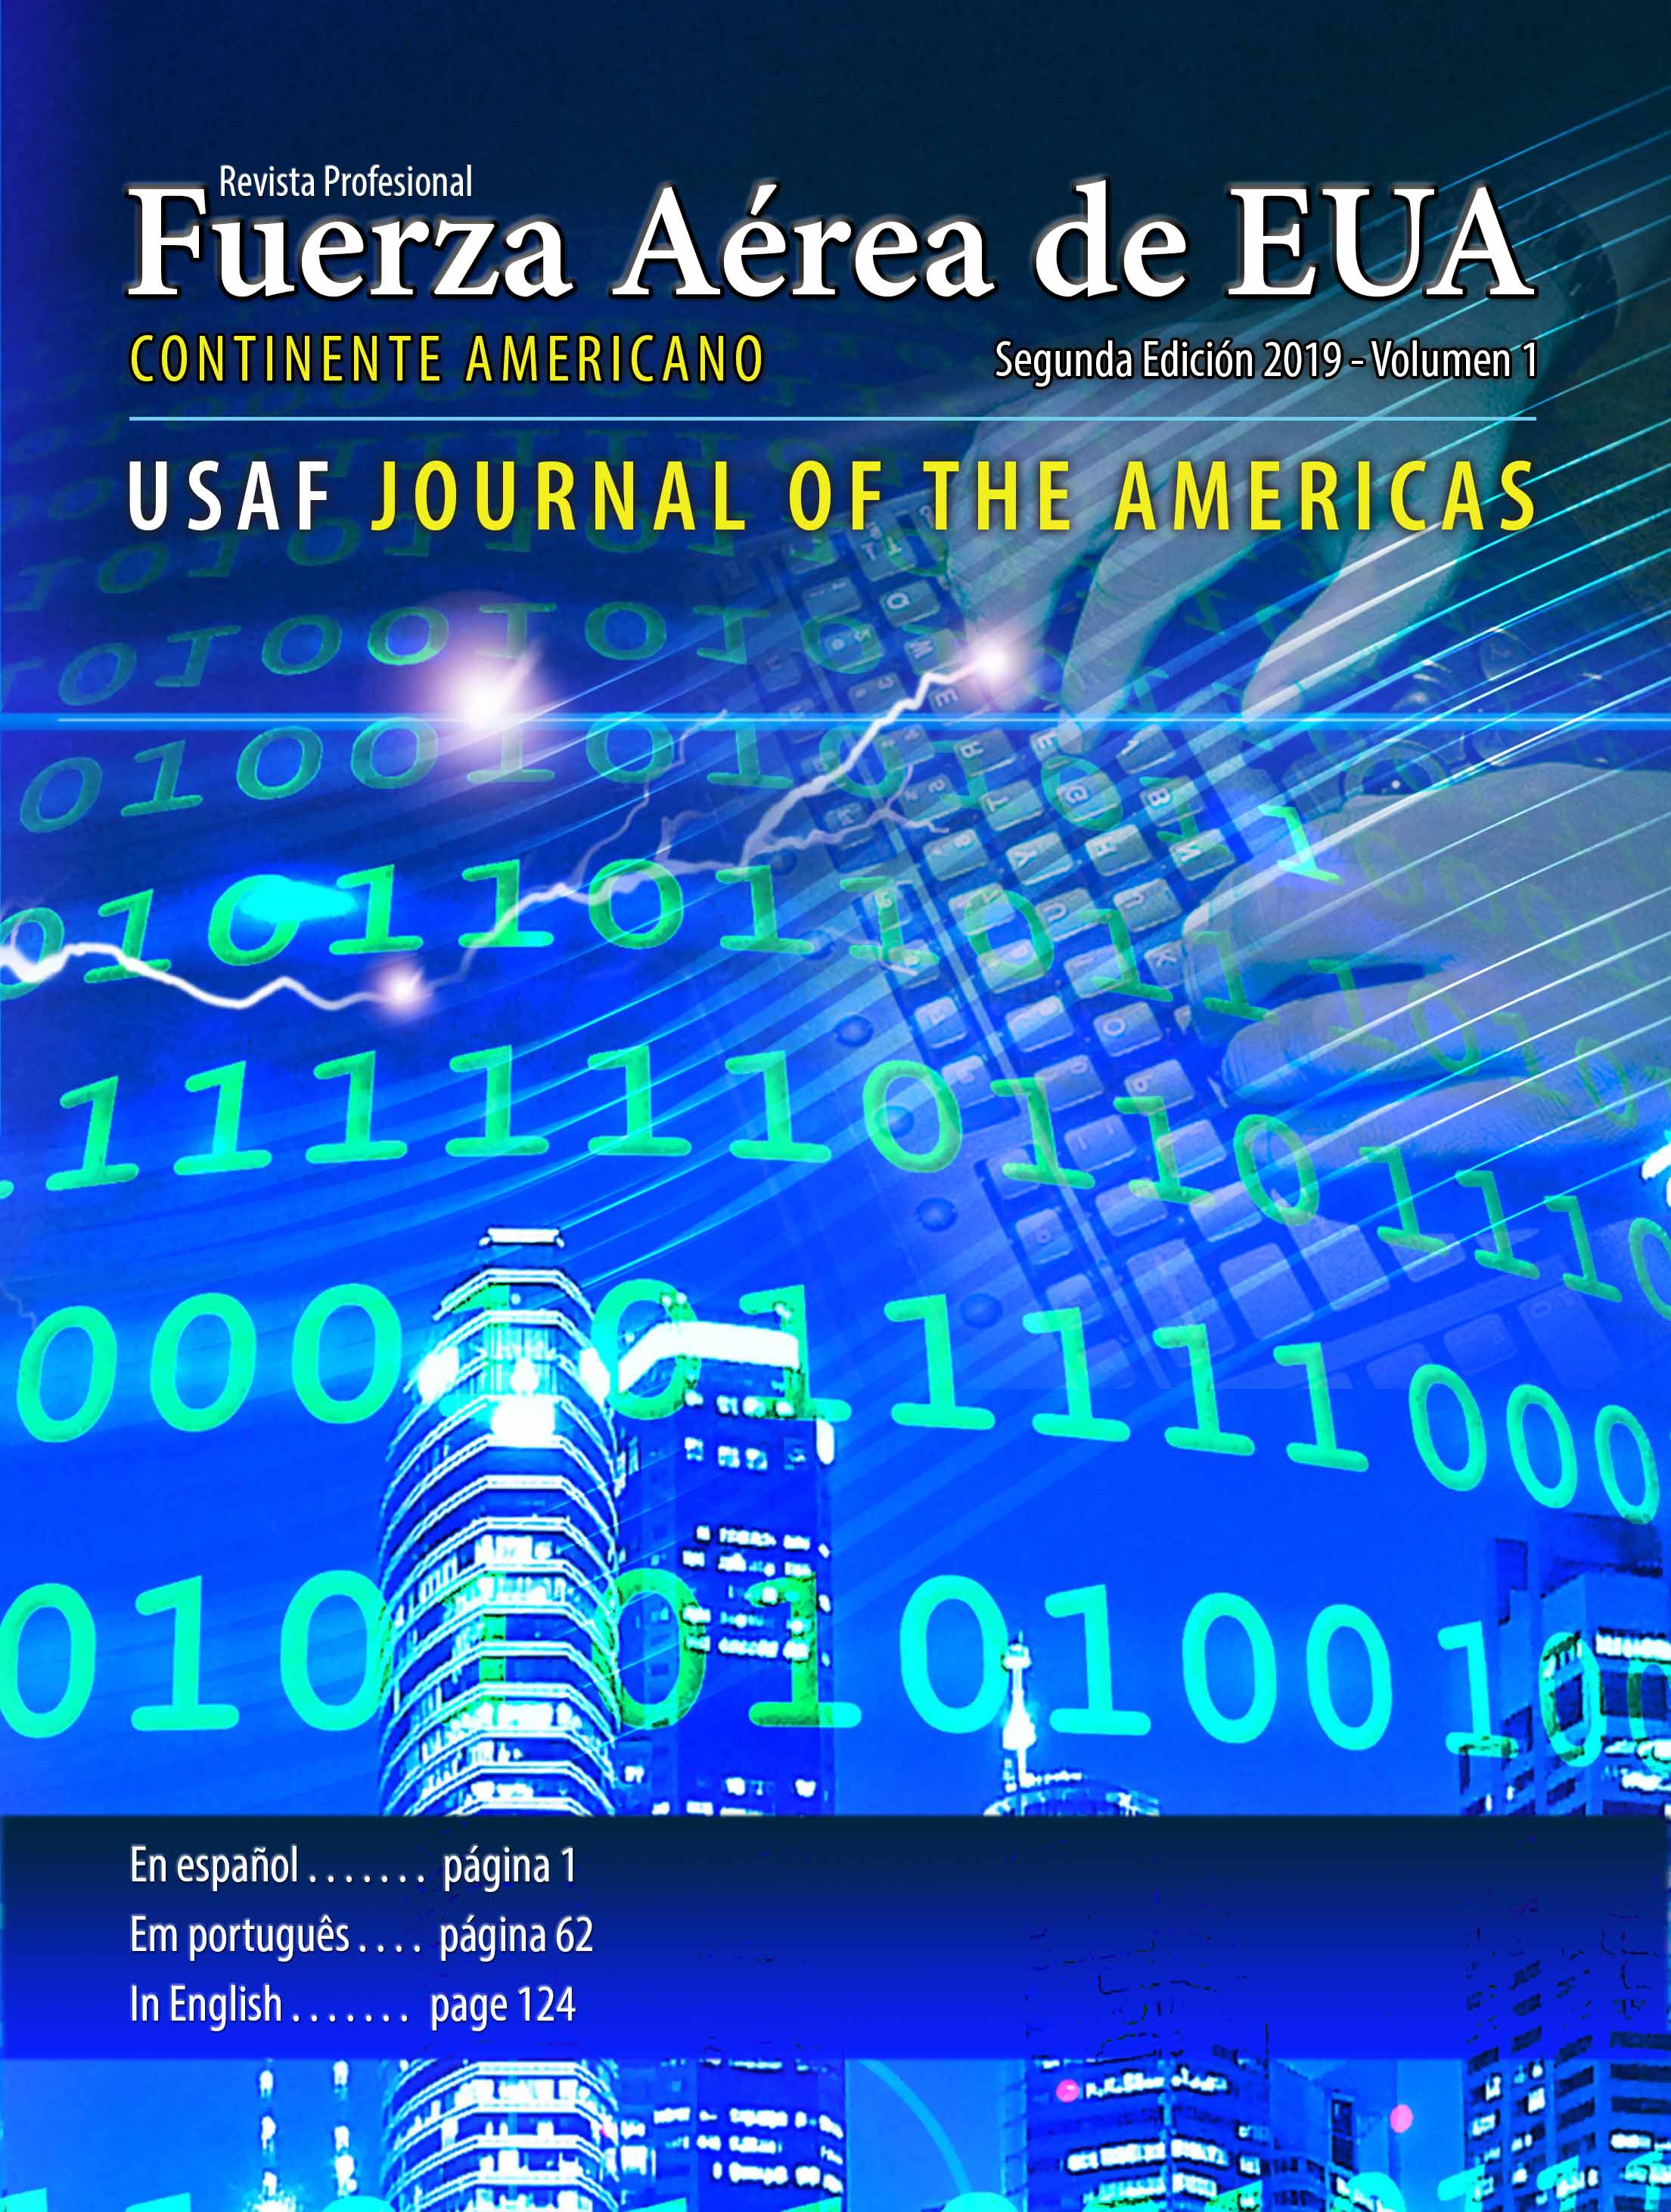 Revista Profesional - Fuerza Aérea de EUA, Continente Americano 2019-2